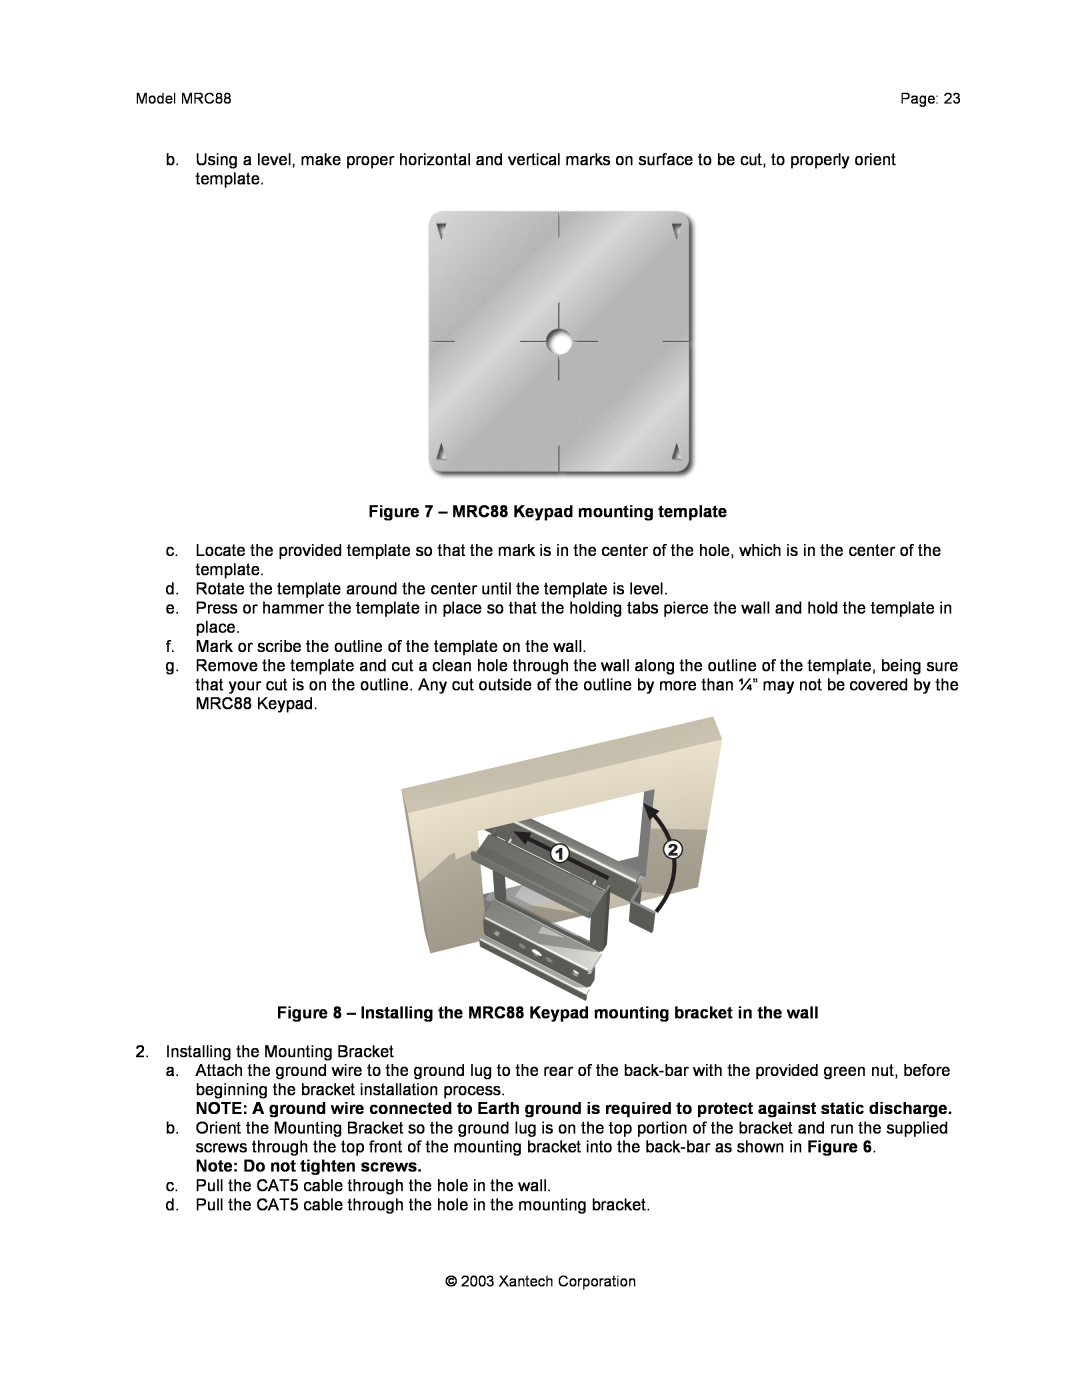 Xantech mrc88 installation instructions MRC88 Keypad mounting template, Note Do not tighten screws 